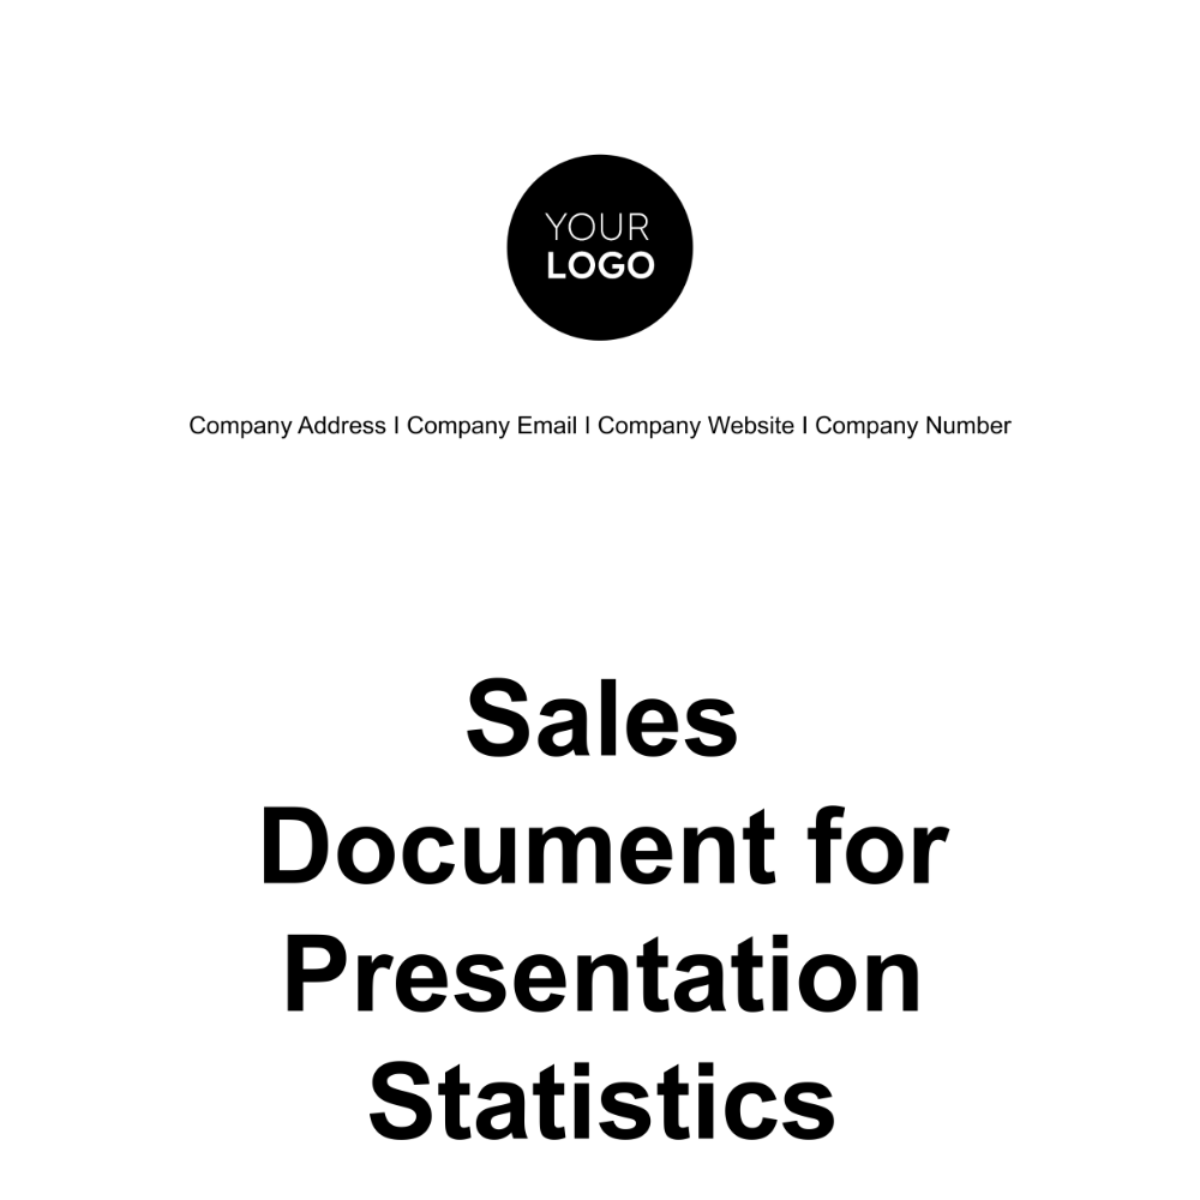 Free Sales Document for Presentation Statistics Template